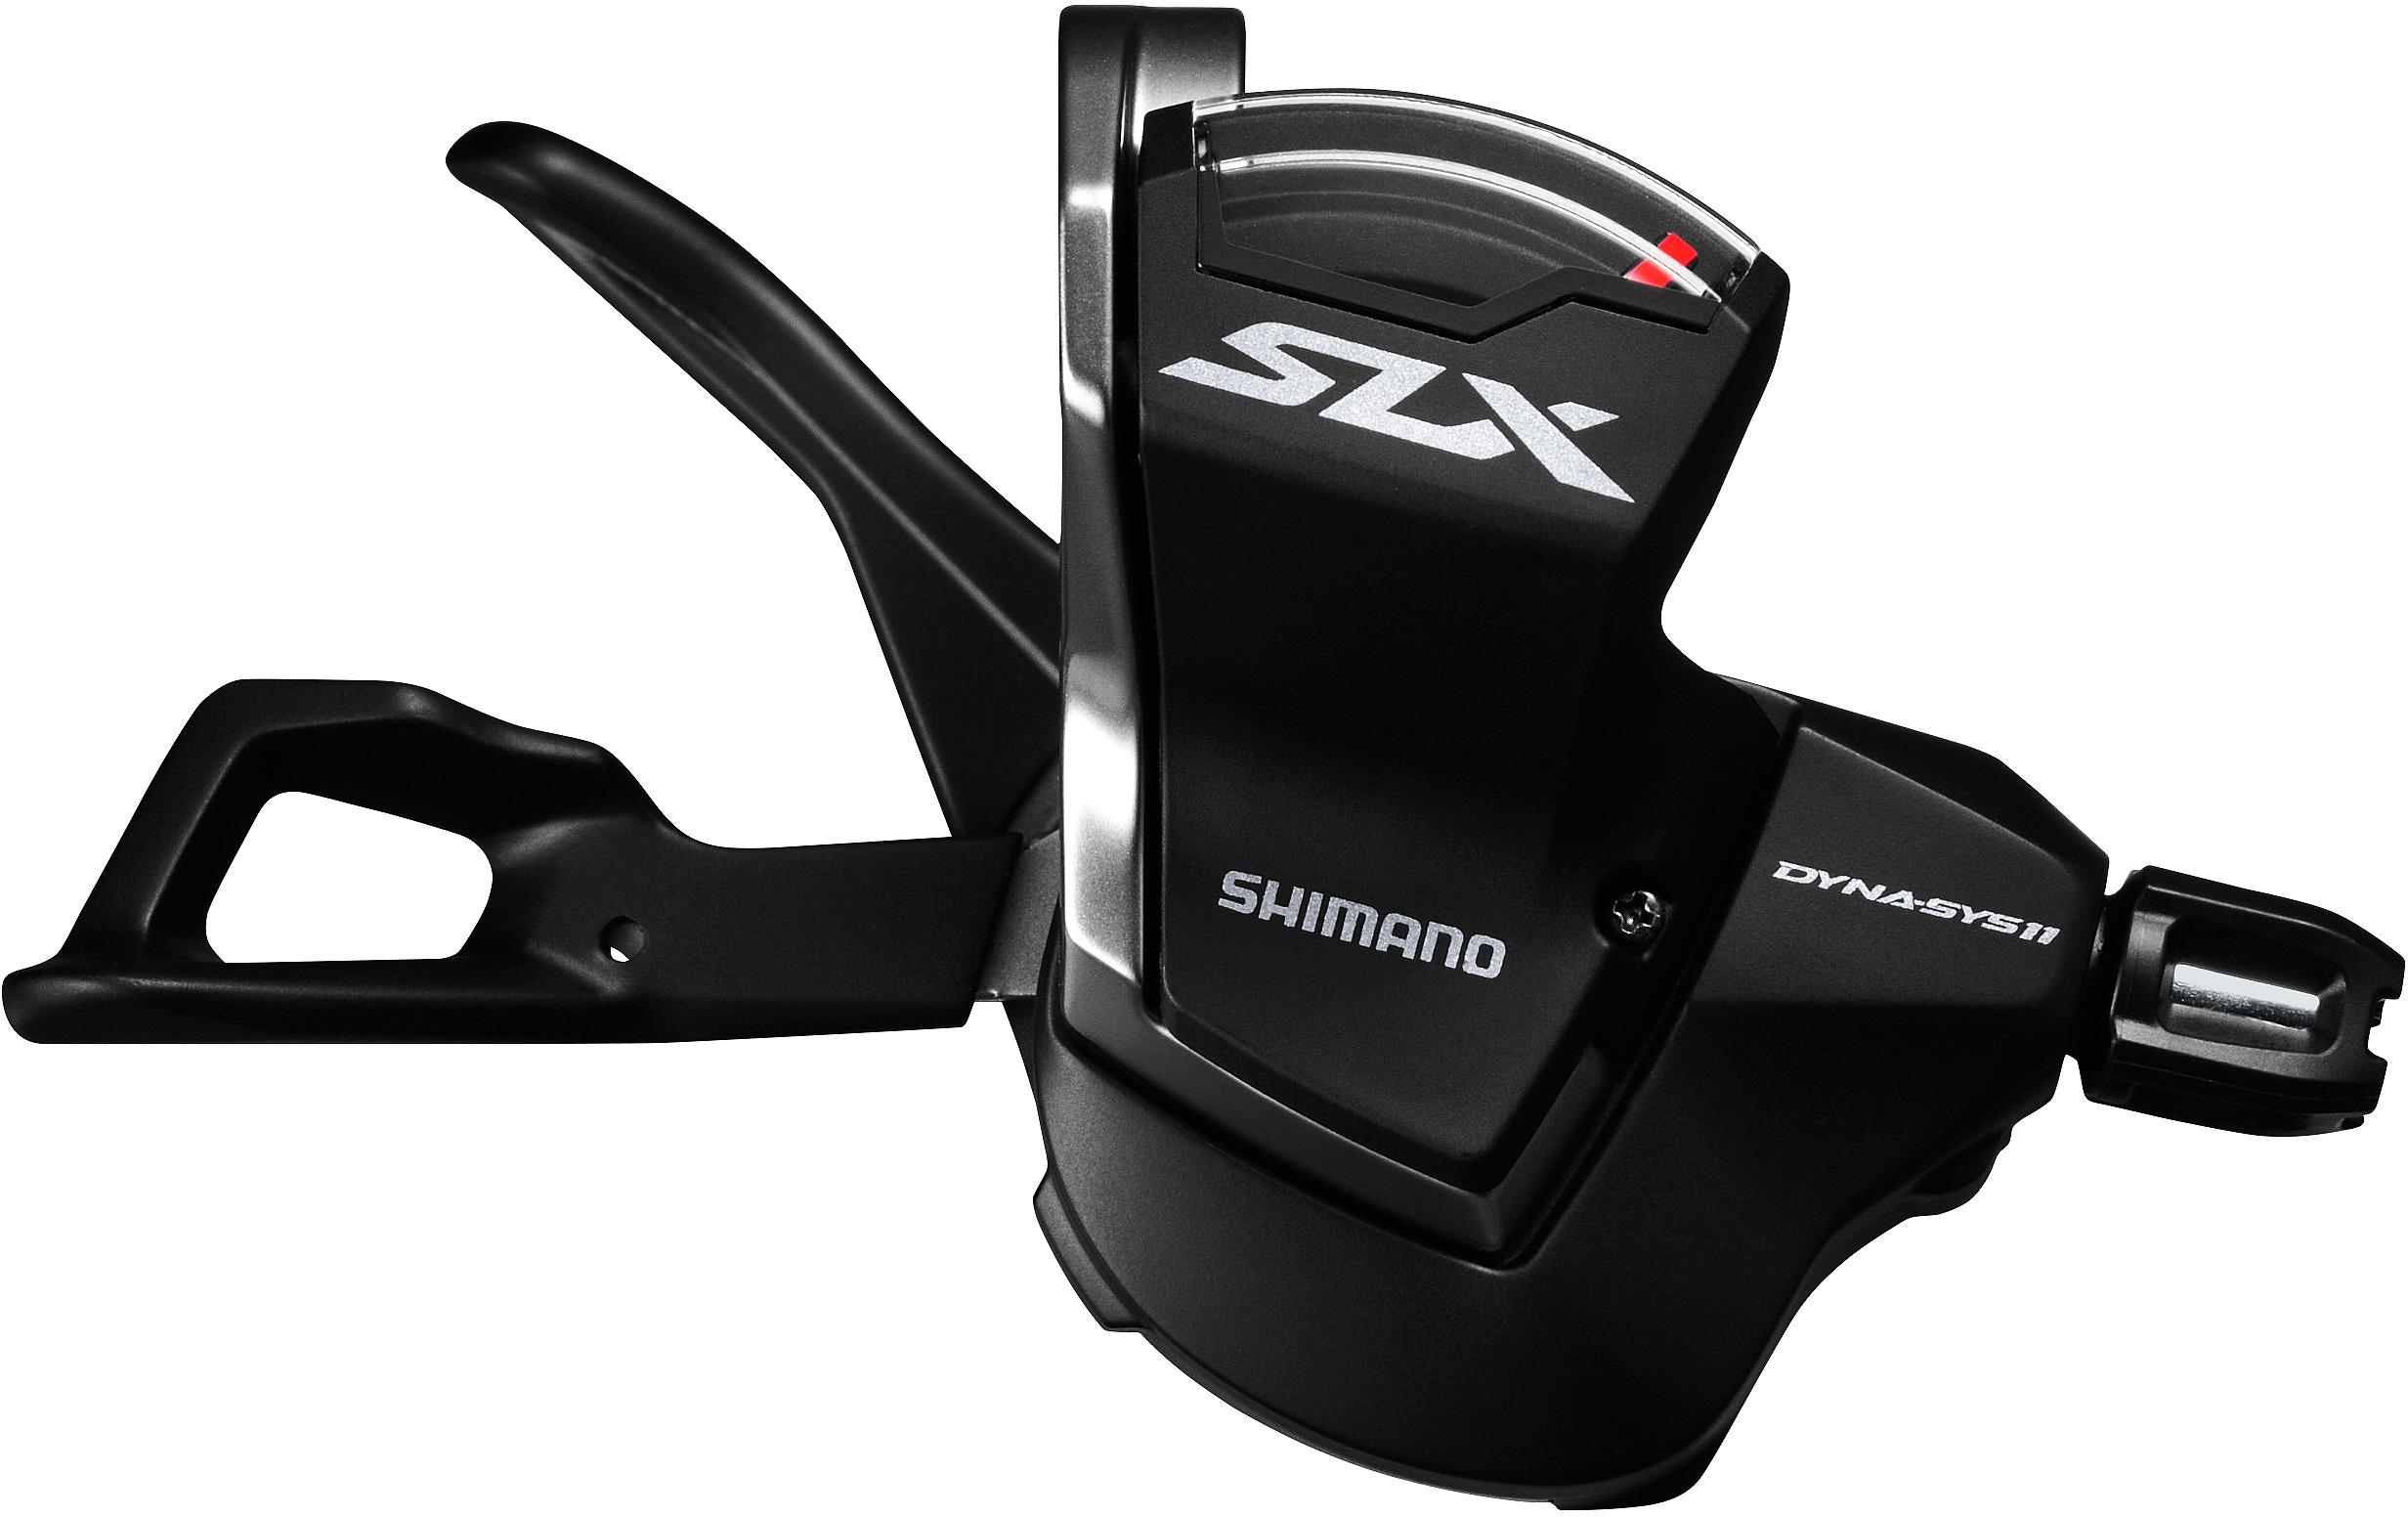 Shimano Slx M7000 11 Speed Rear Shifter  Black